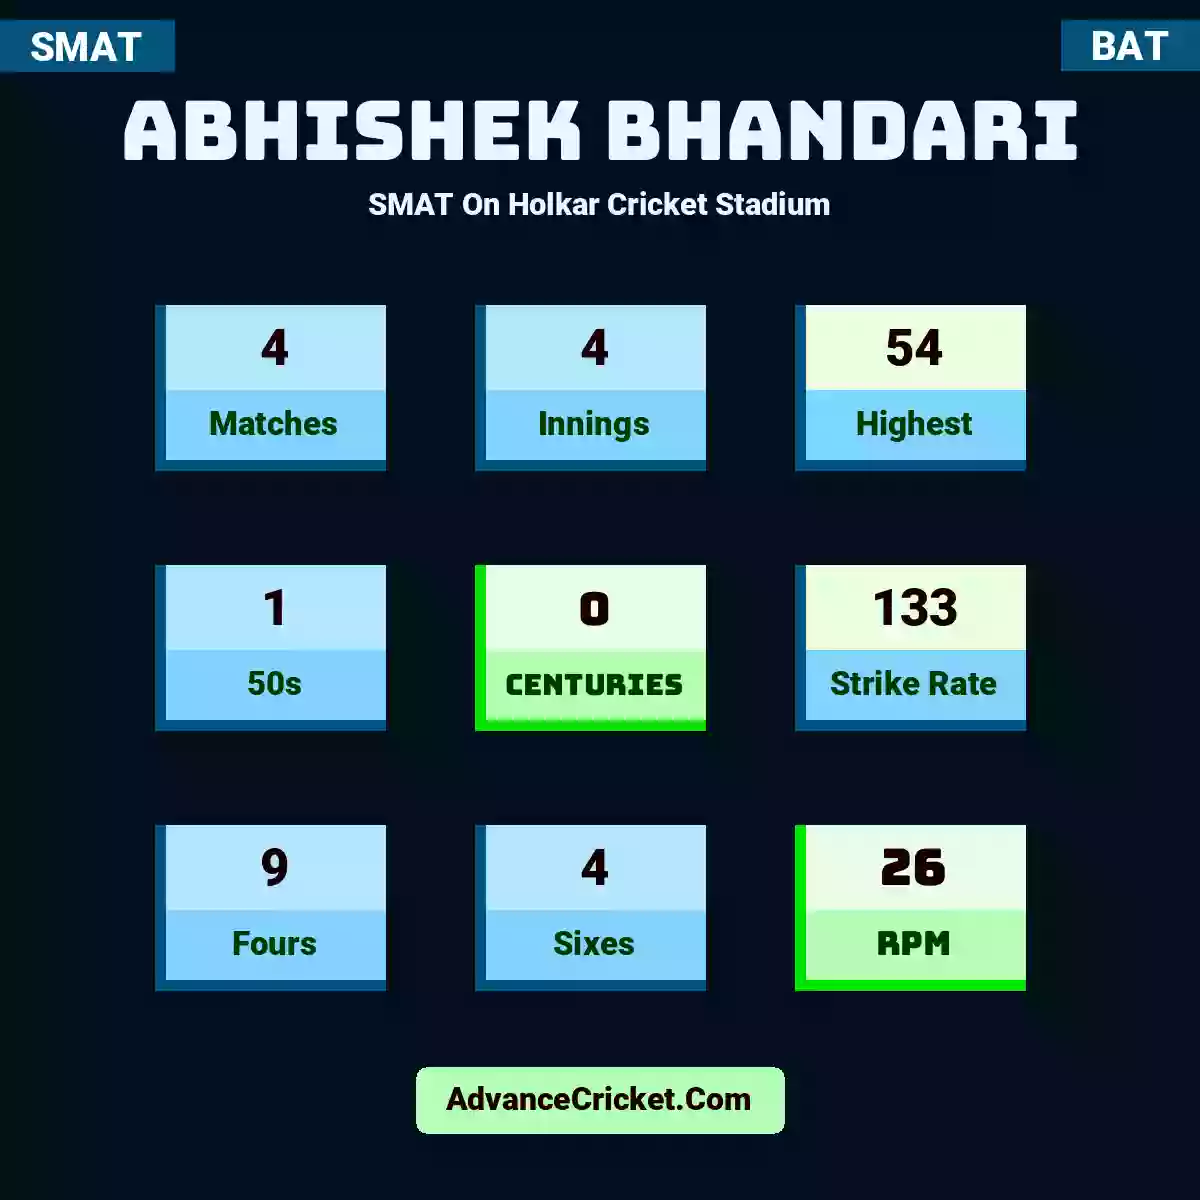 Abhishek Bhandari SMAT  On Holkar Cricket Stadium, Abhishek Bhandari played 4 matches, scored 54 runs as highest, 1 half-centuries, and 0 centuries, with a strike rate of 133. A.Bhandari hit 9 fours and 4 sixes, with an RPM of 26.